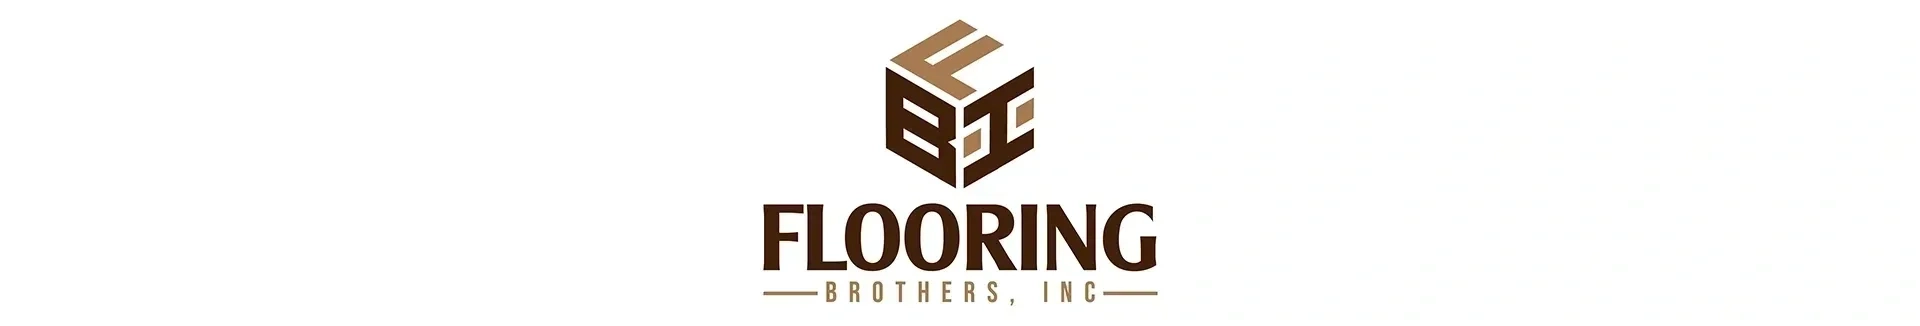 Flooring Brothers, inc Logo